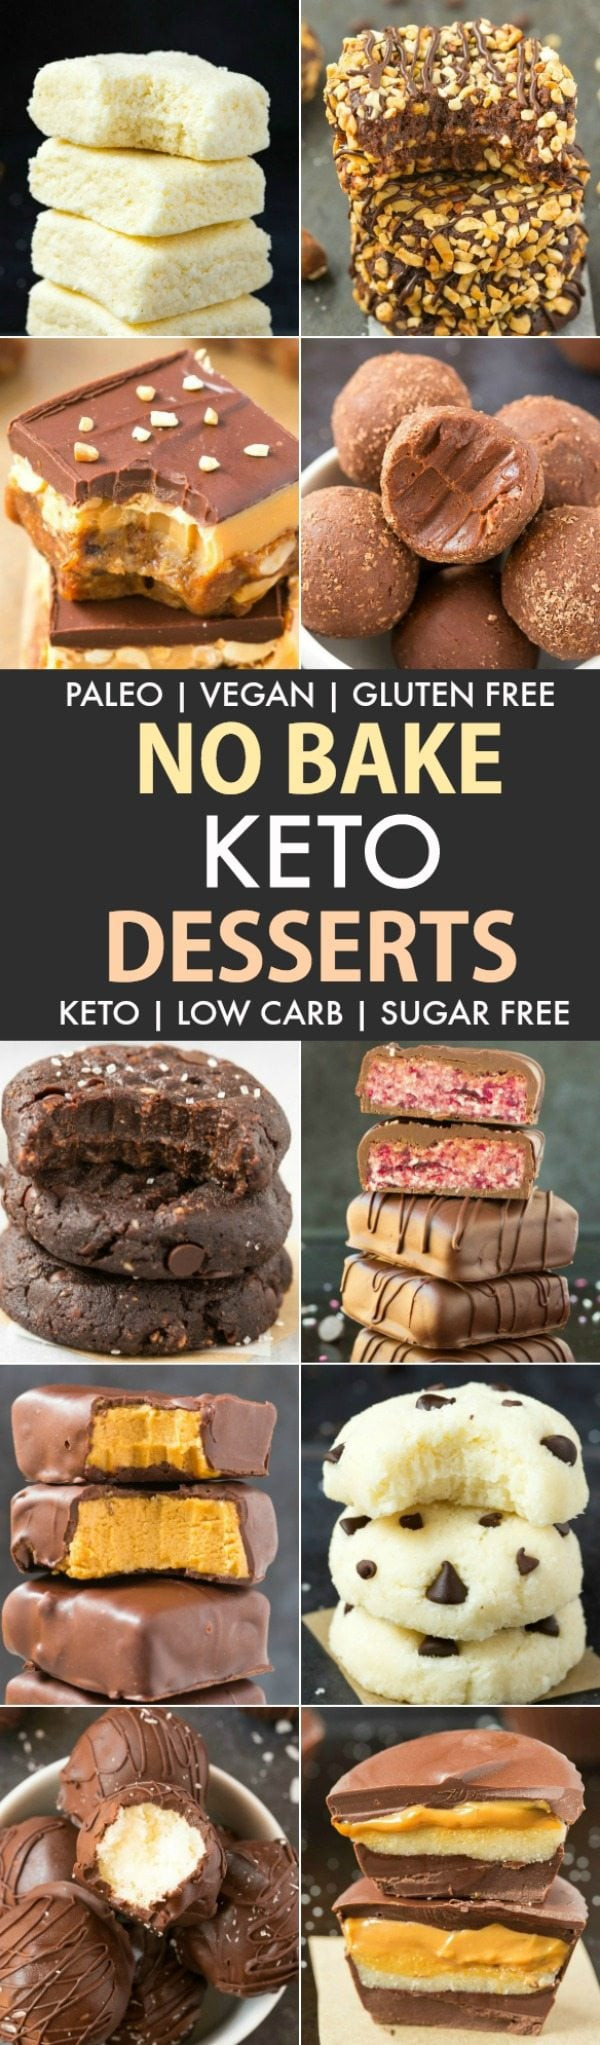 Low Calorie Paleo Desserts
 Easy No Bake Low Carb Keto Desserts Paleo Vegan